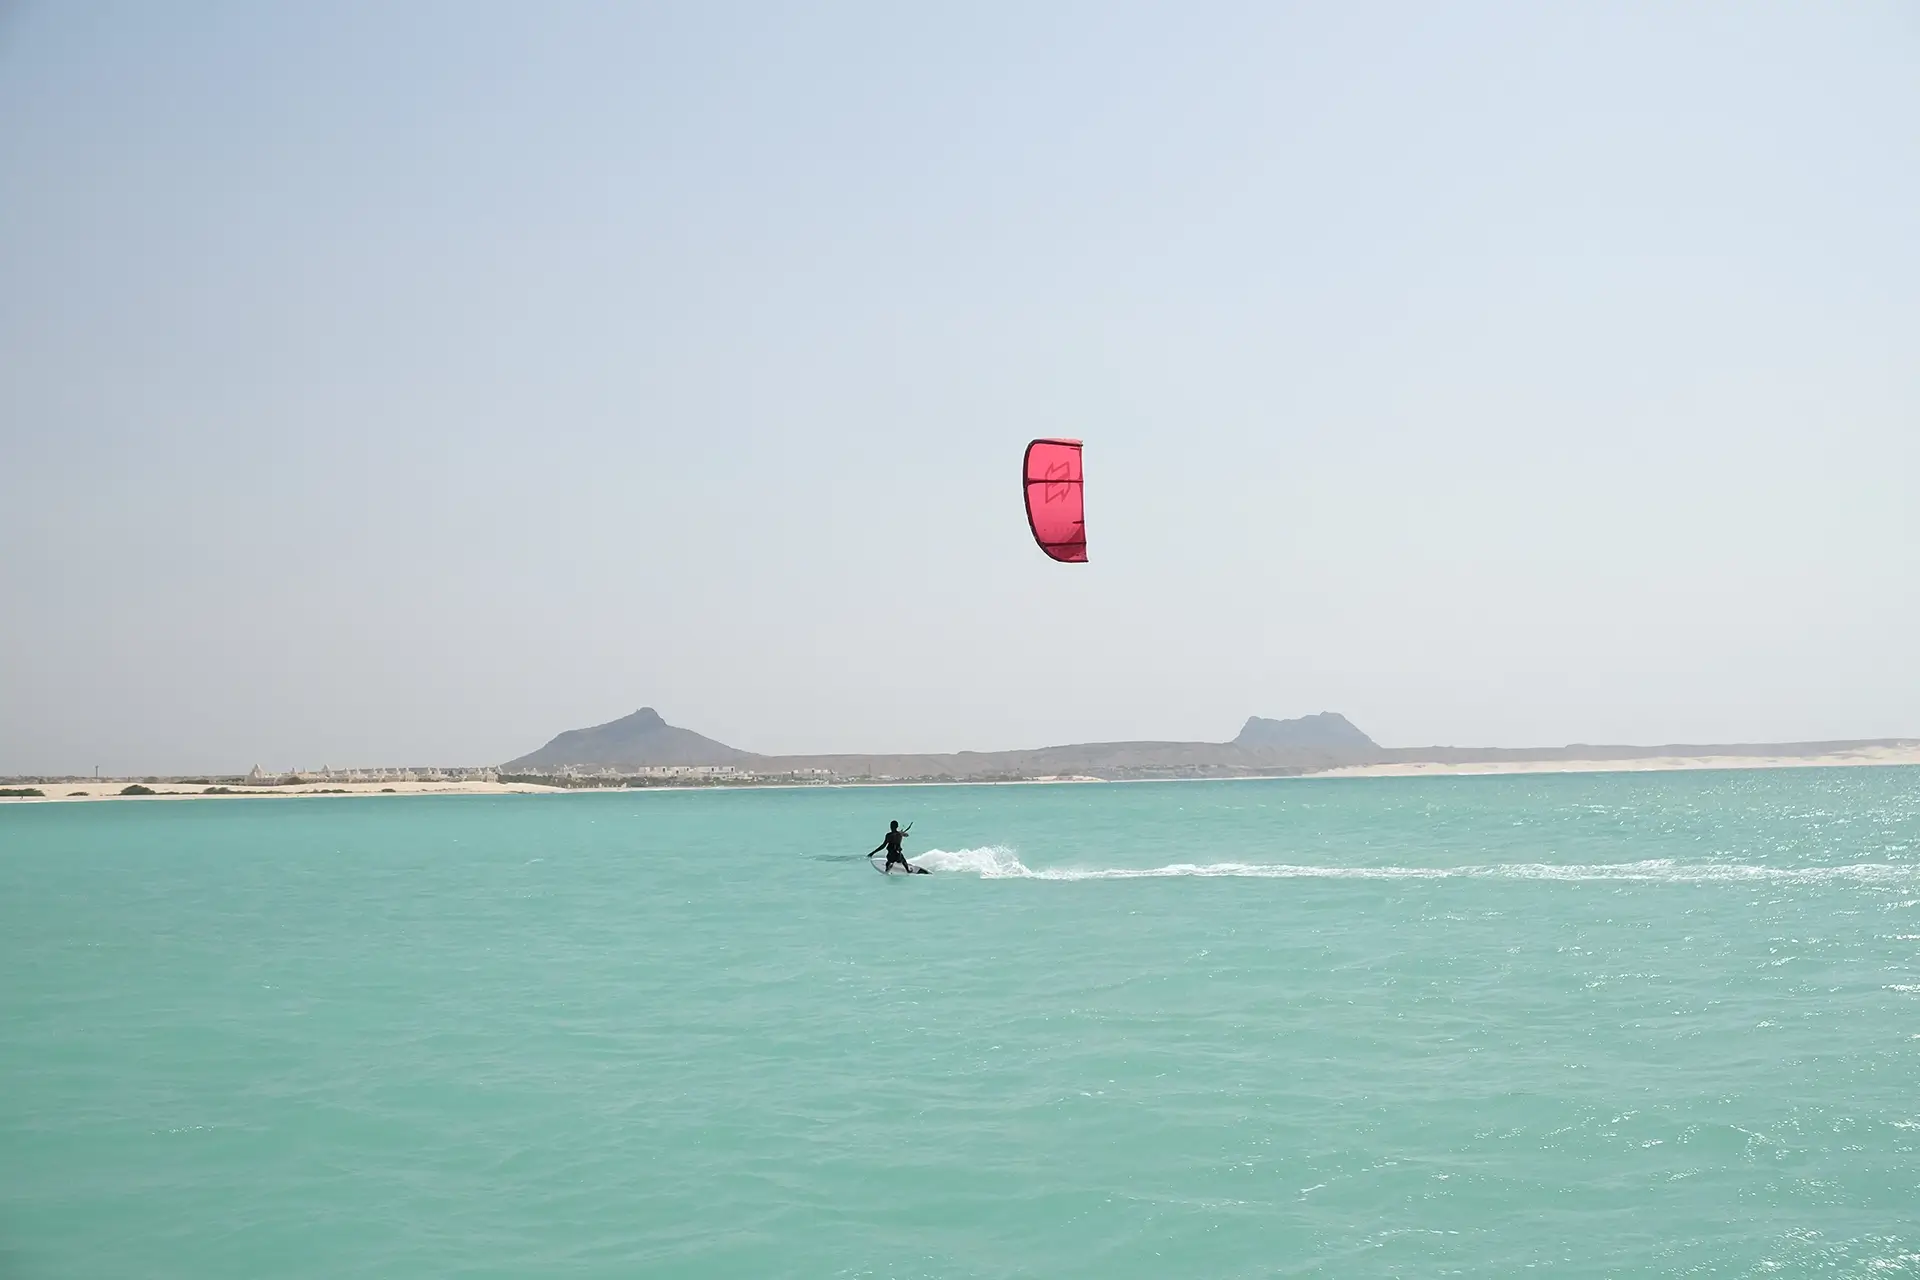 Kiter with red kite plaining on blue water at Boavista